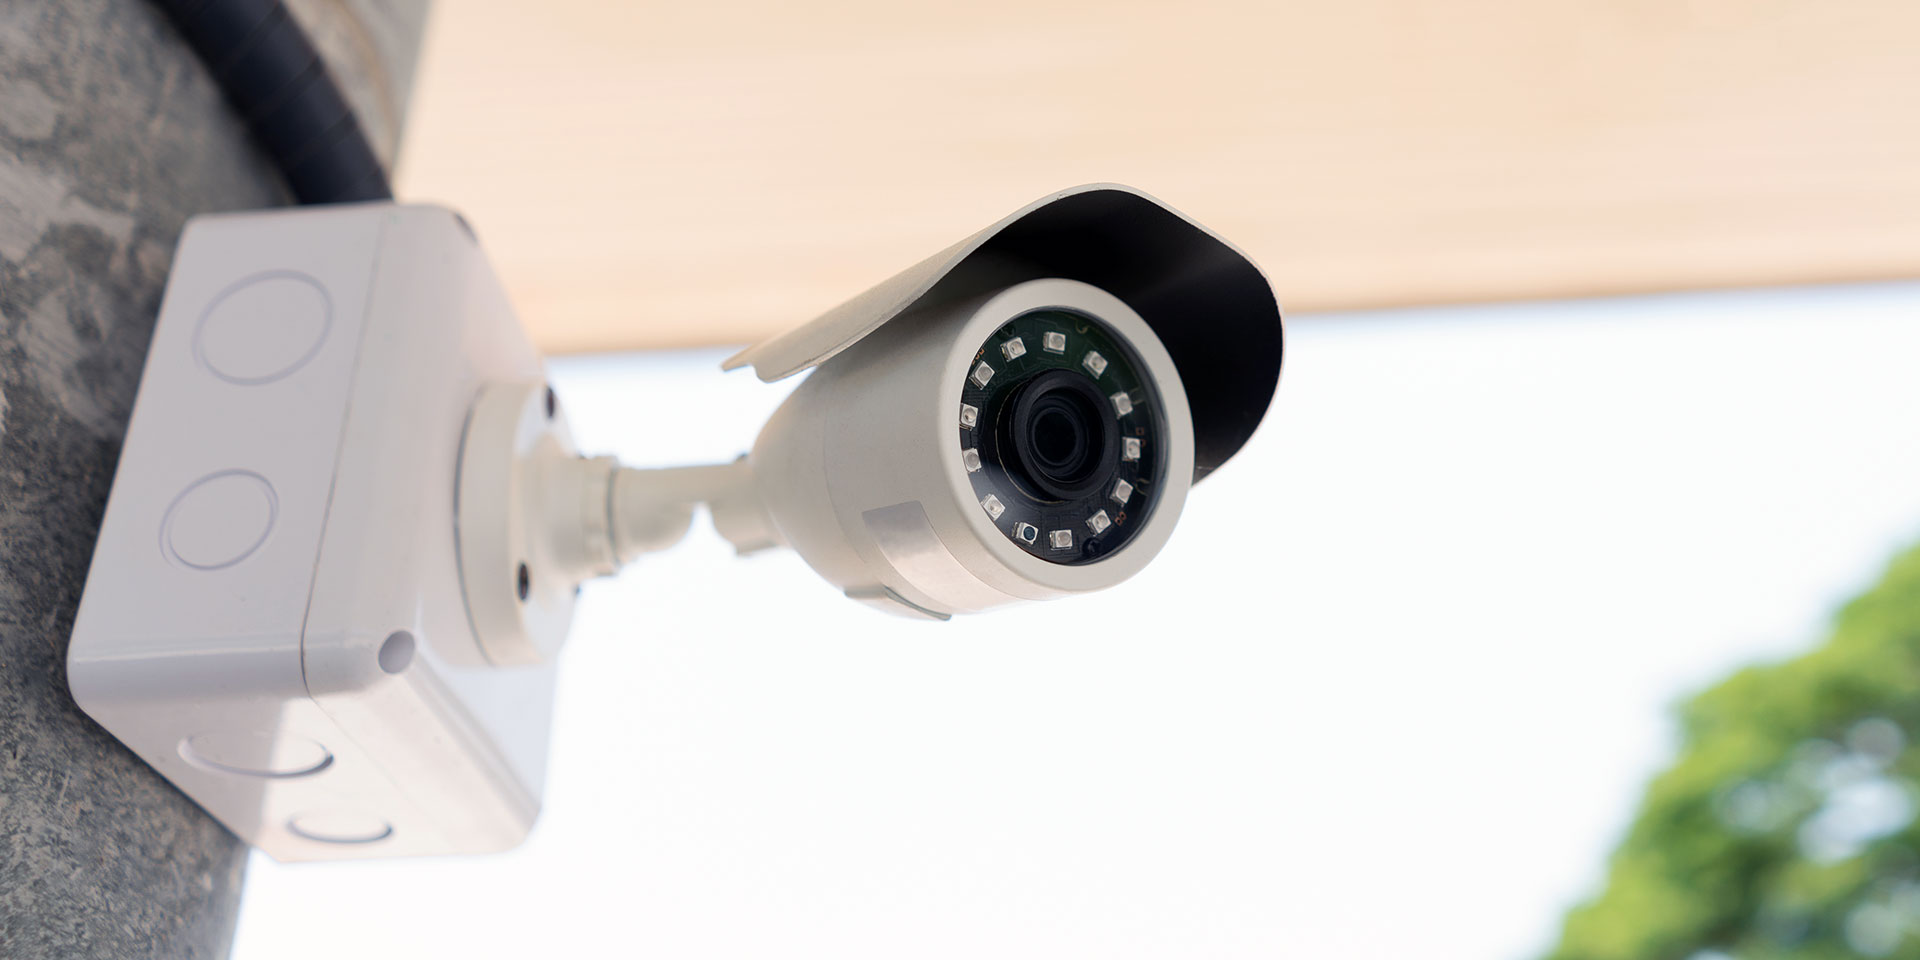 The benefits of having CCTV